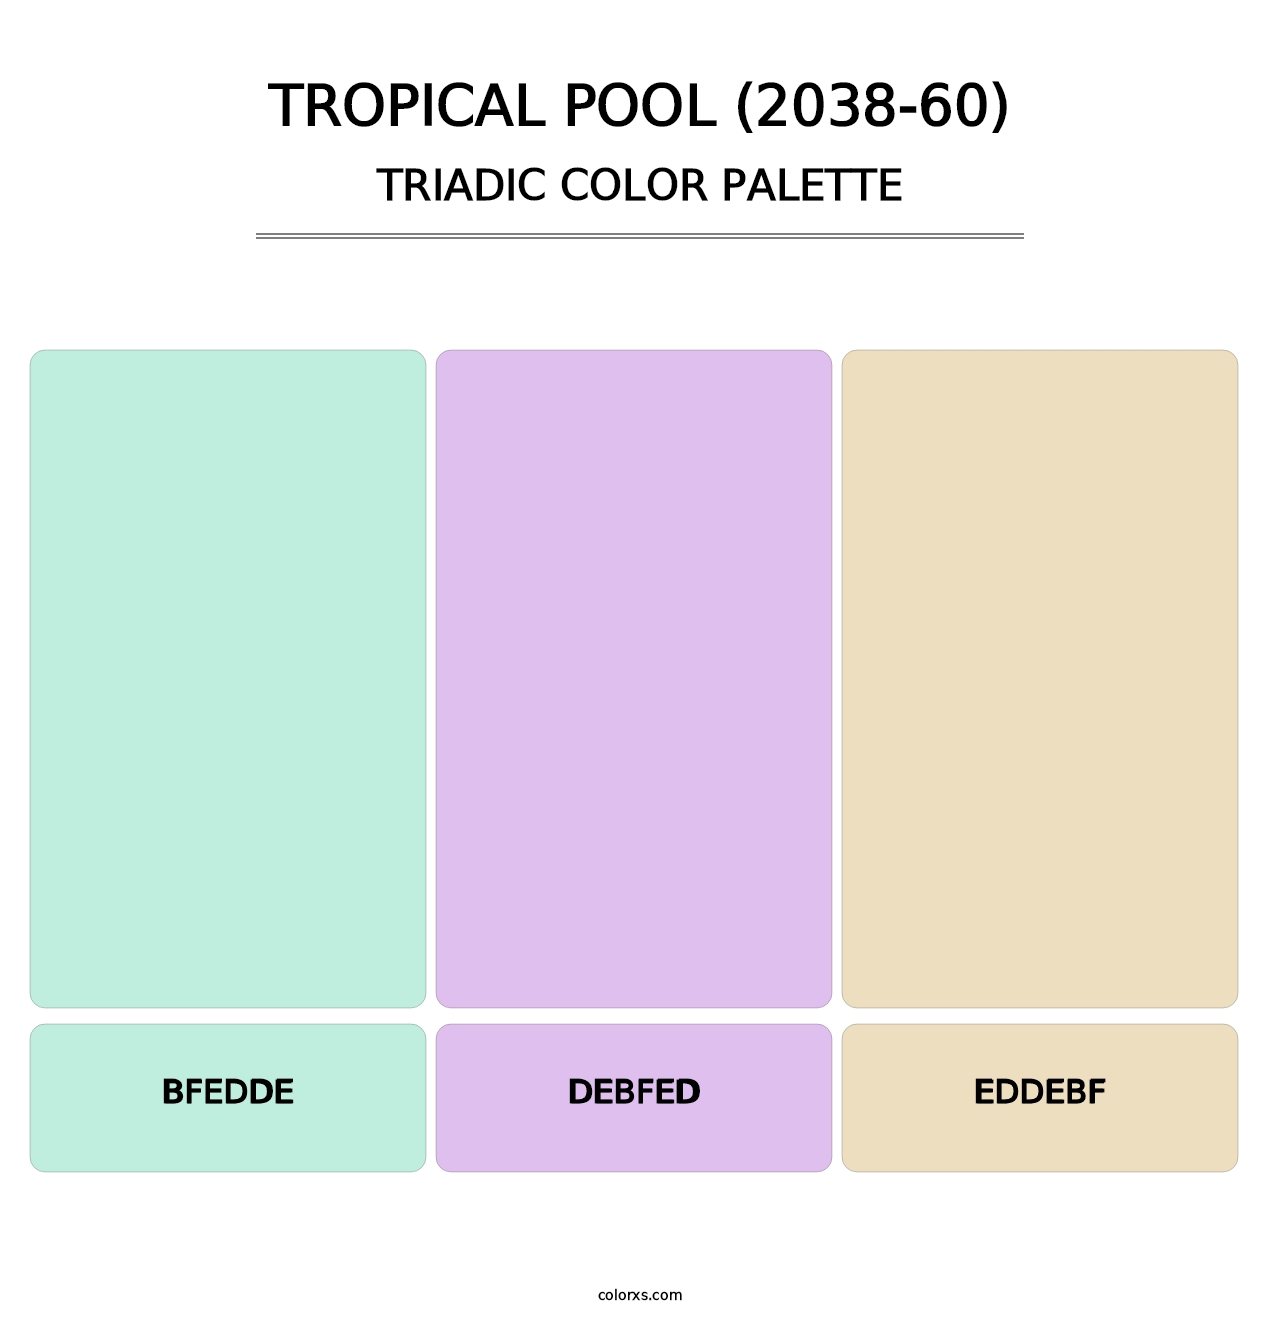 Tropical Pool (2038-60) - Triadic Color Palette